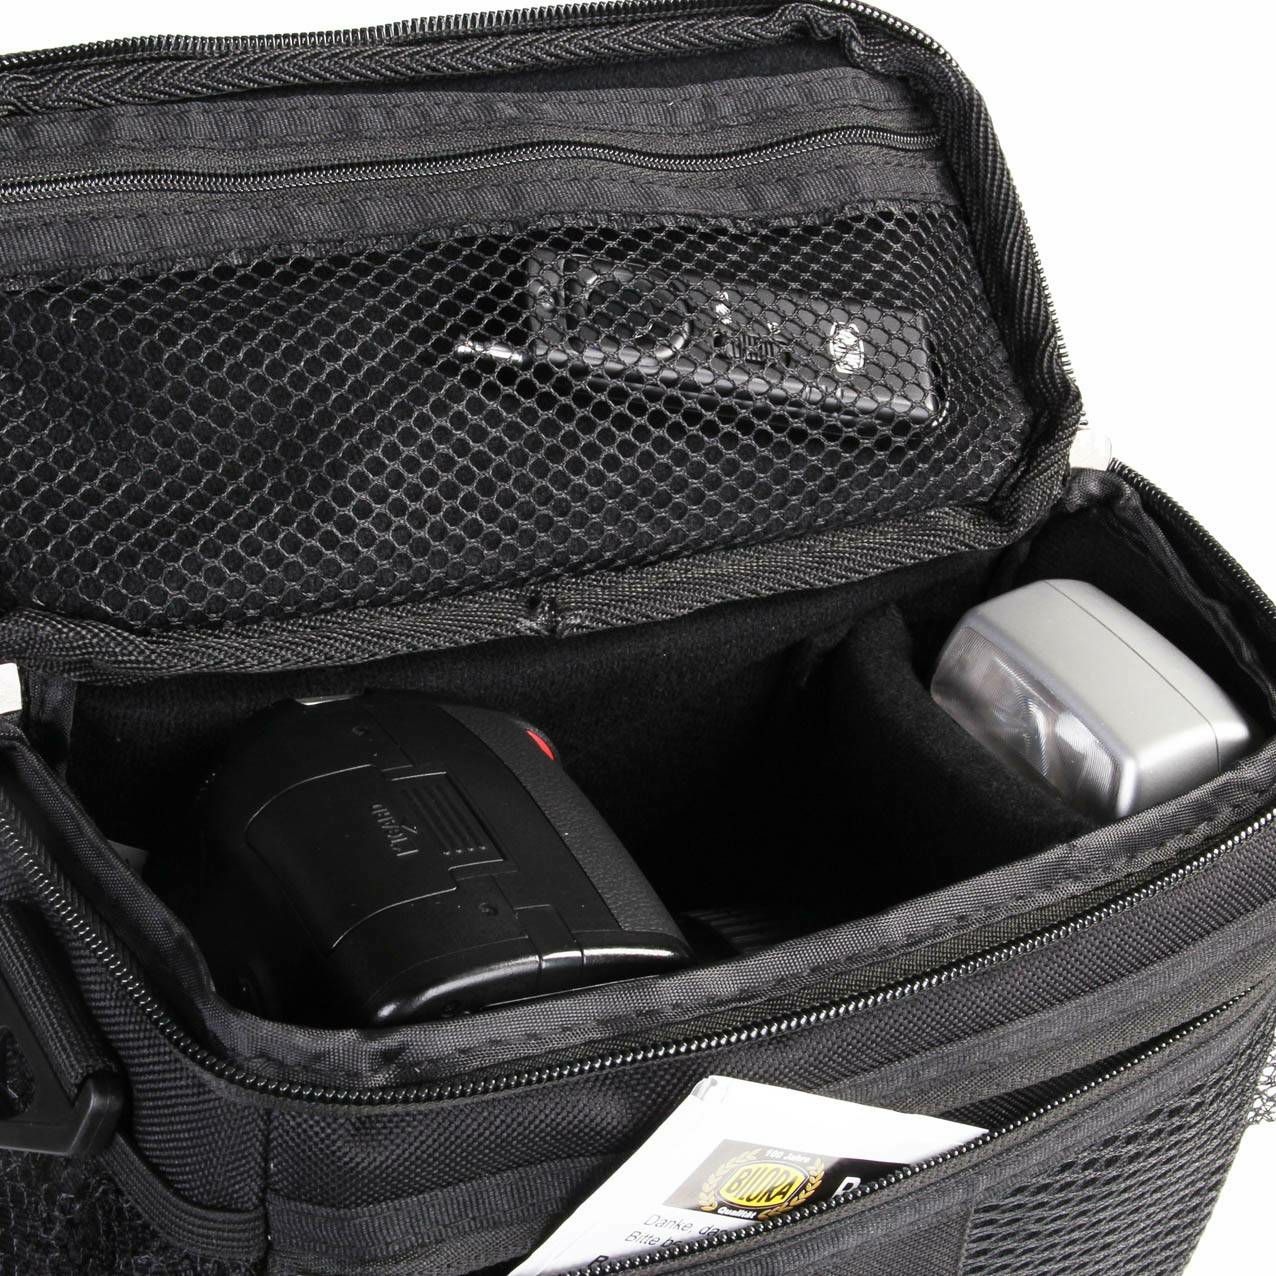 Bilora Digi Star Compact S Bag (4080) torba za DSLR, mirrorless ili kompaktni fotoaparat